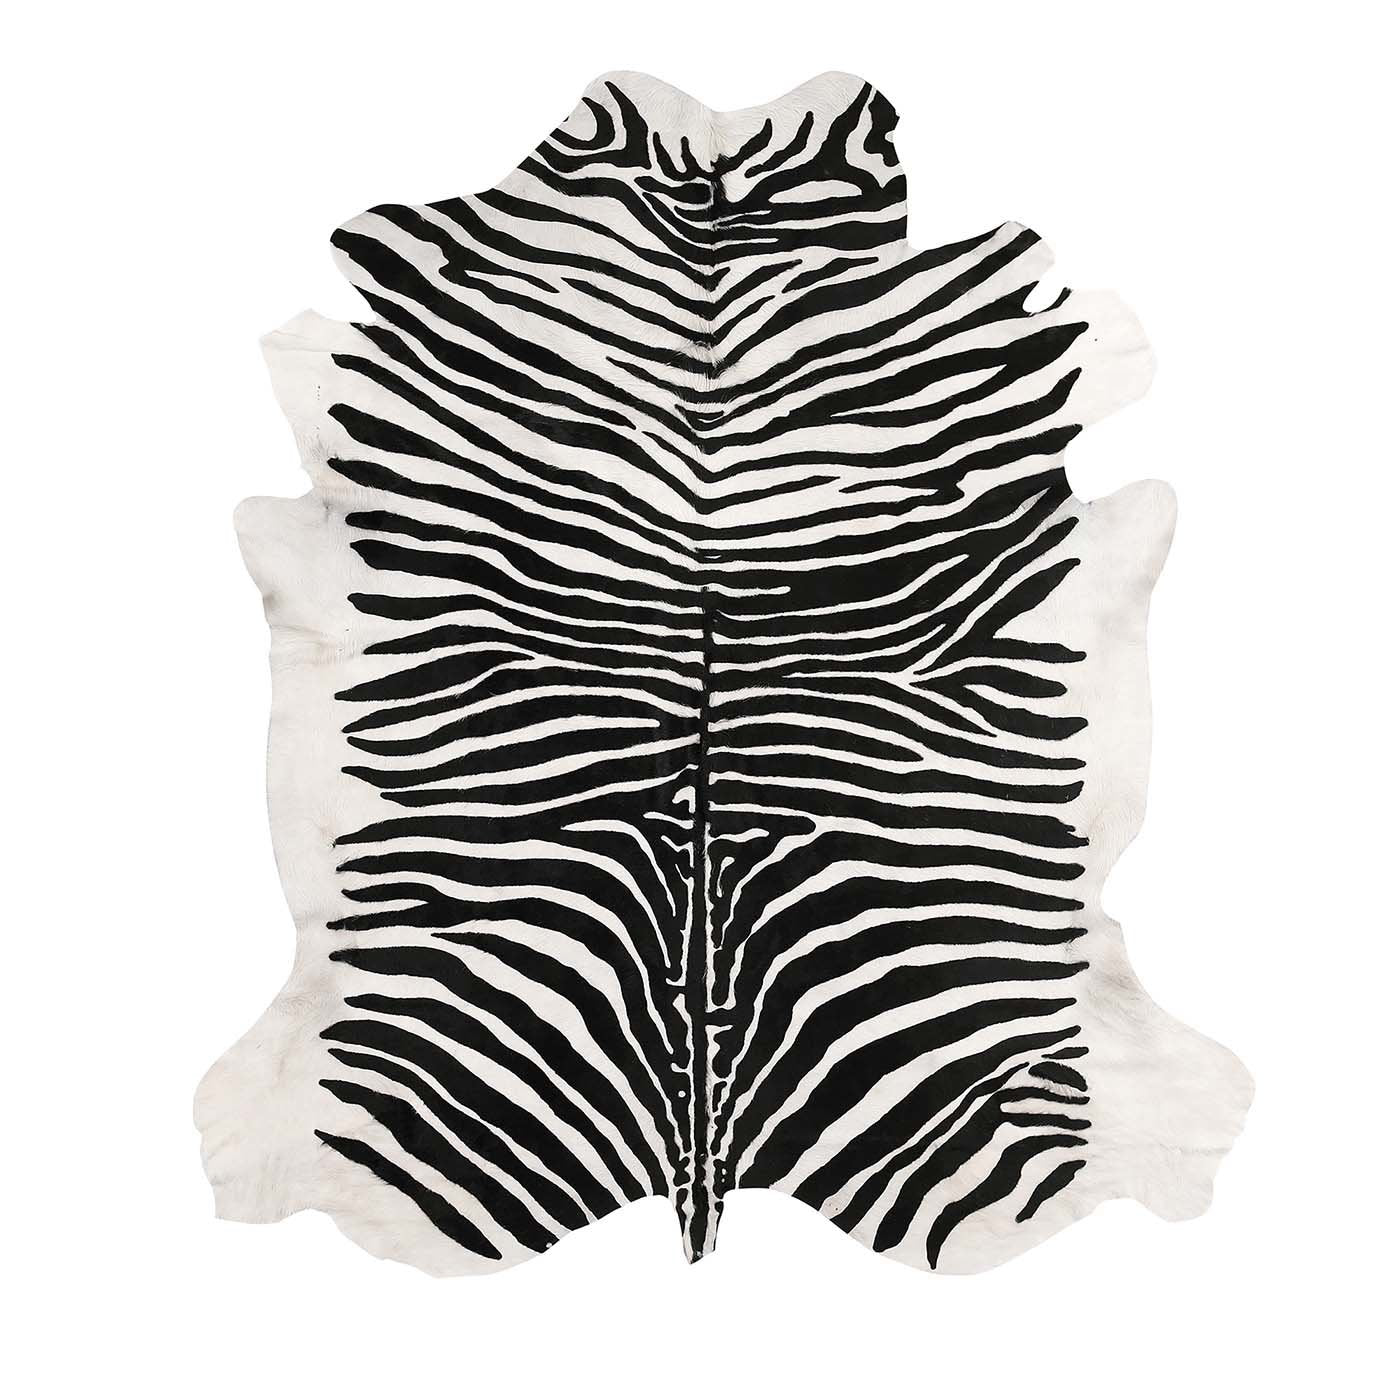 Zebra-Striped Printed Leather Rug Black & White - Main view